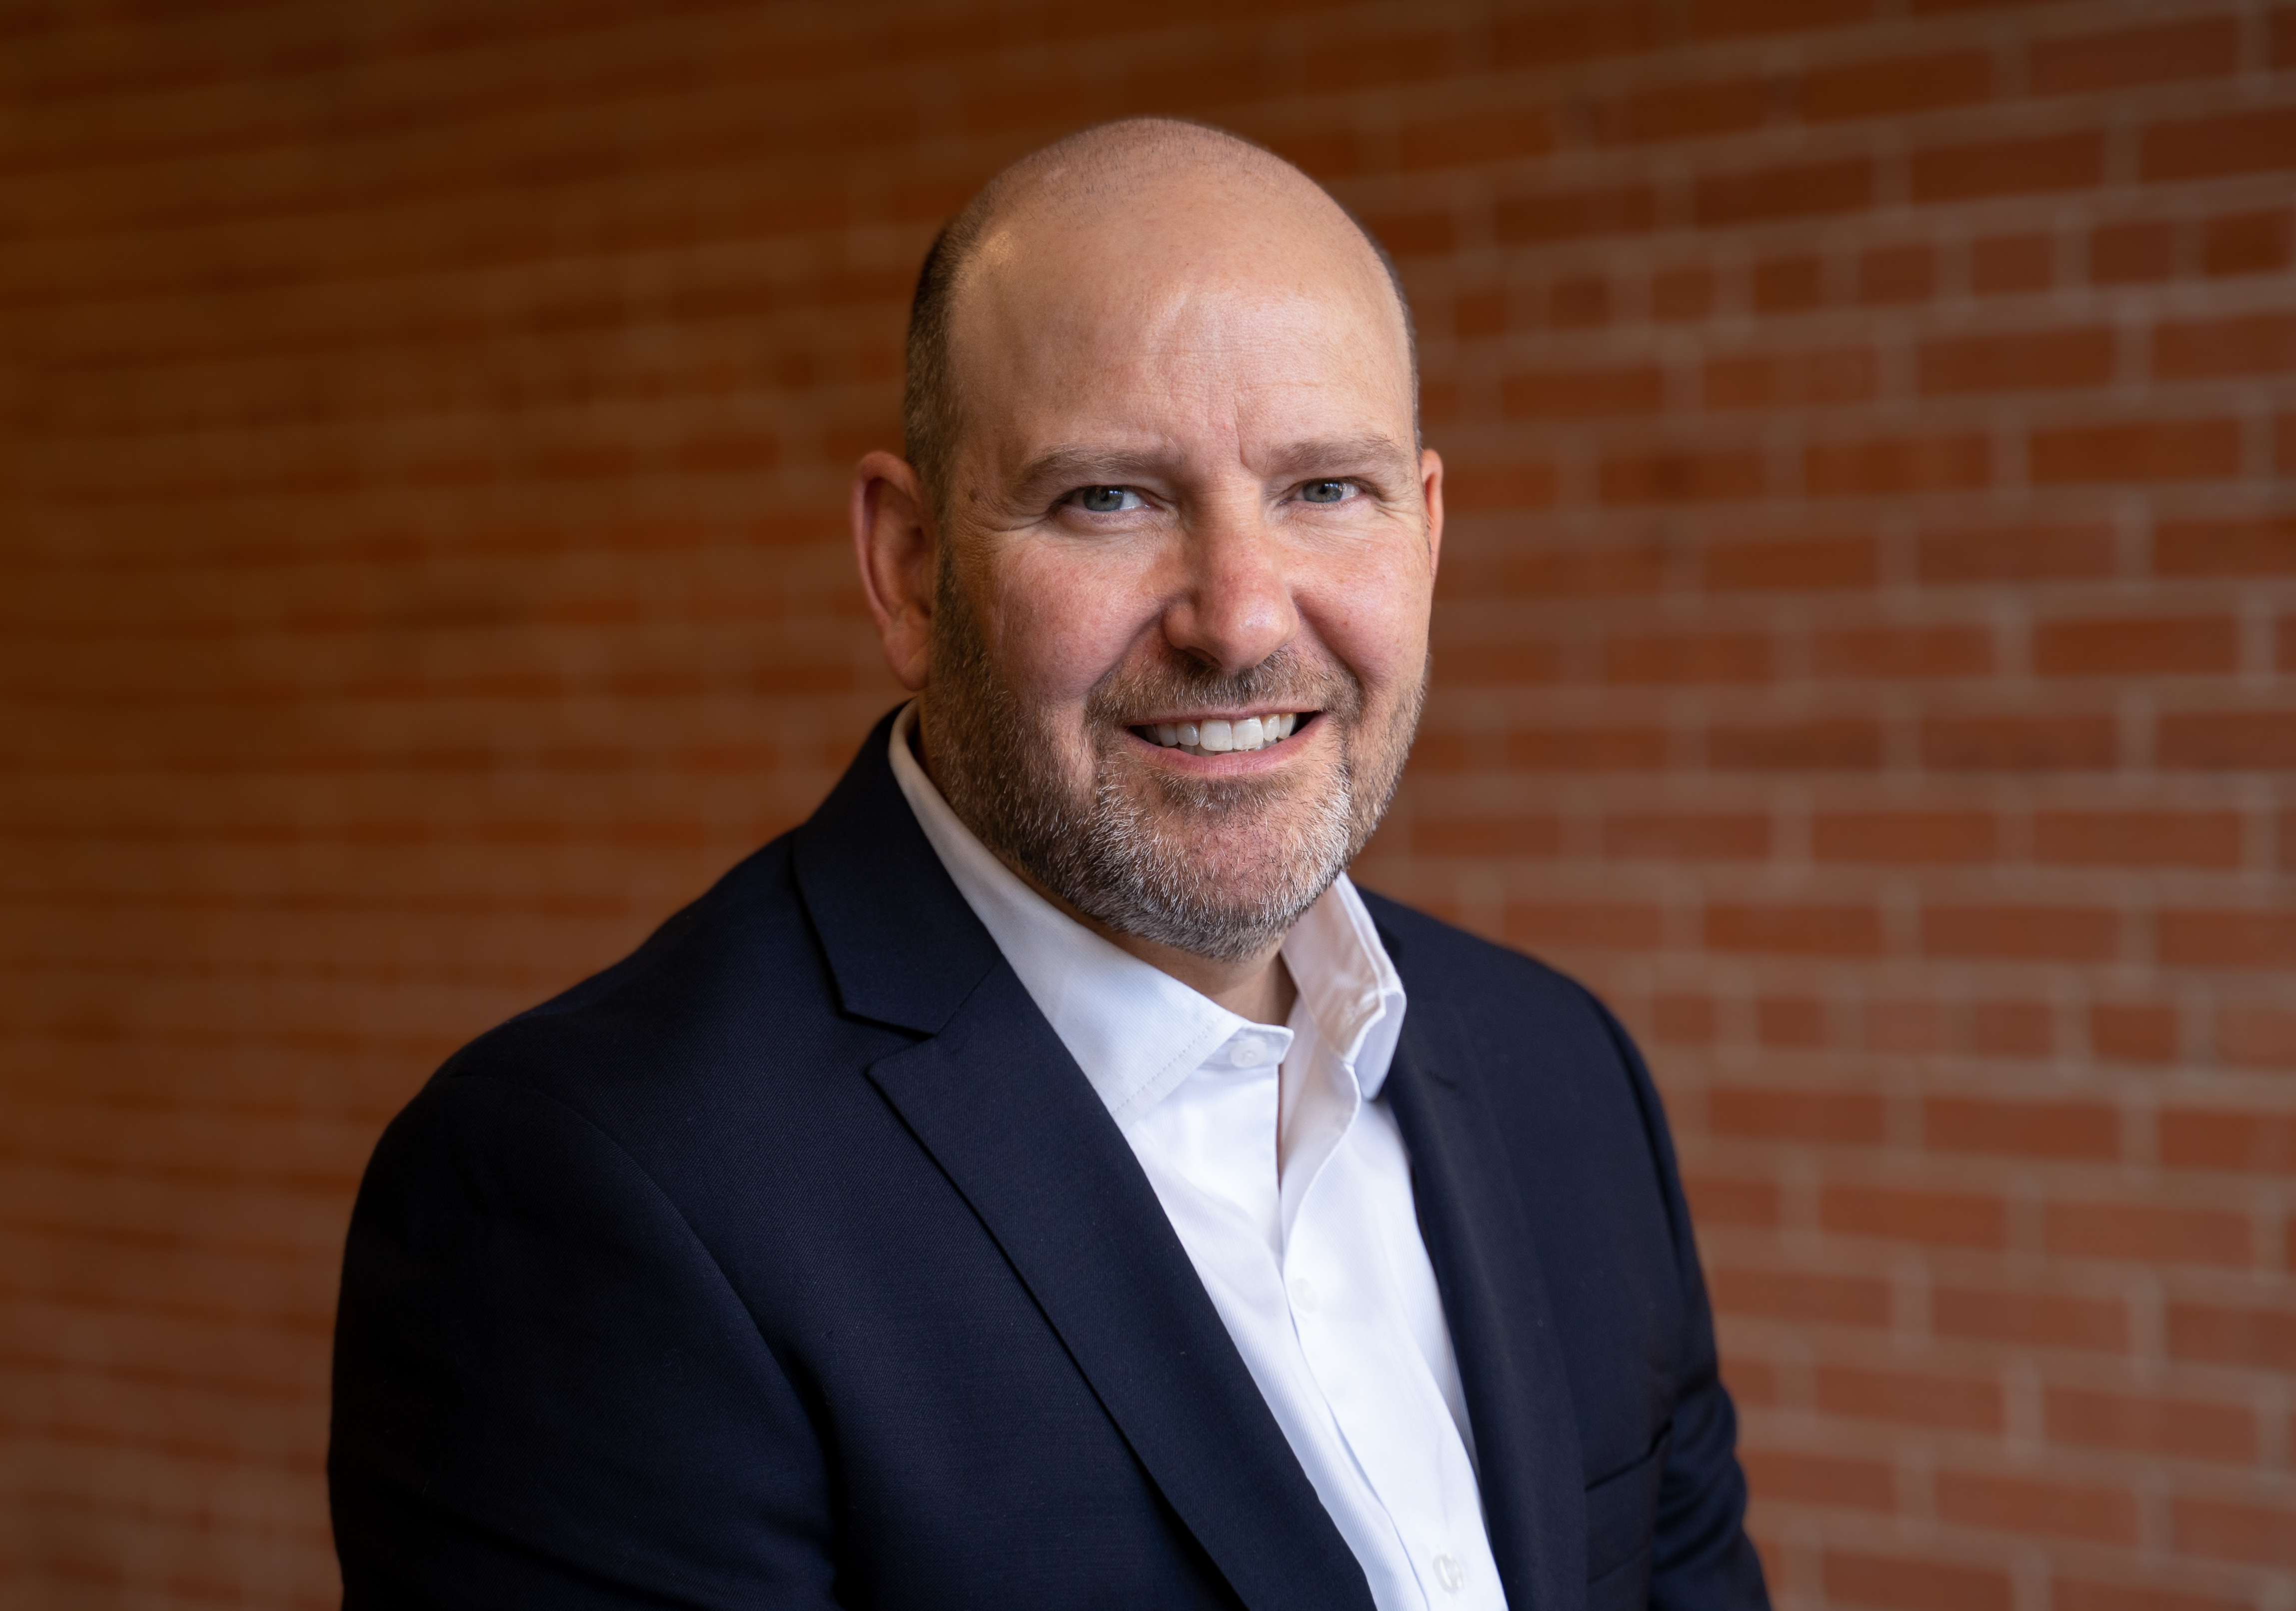 David Brantner Joins Alpine as Chief Executive Officer | Catalyze Dallas